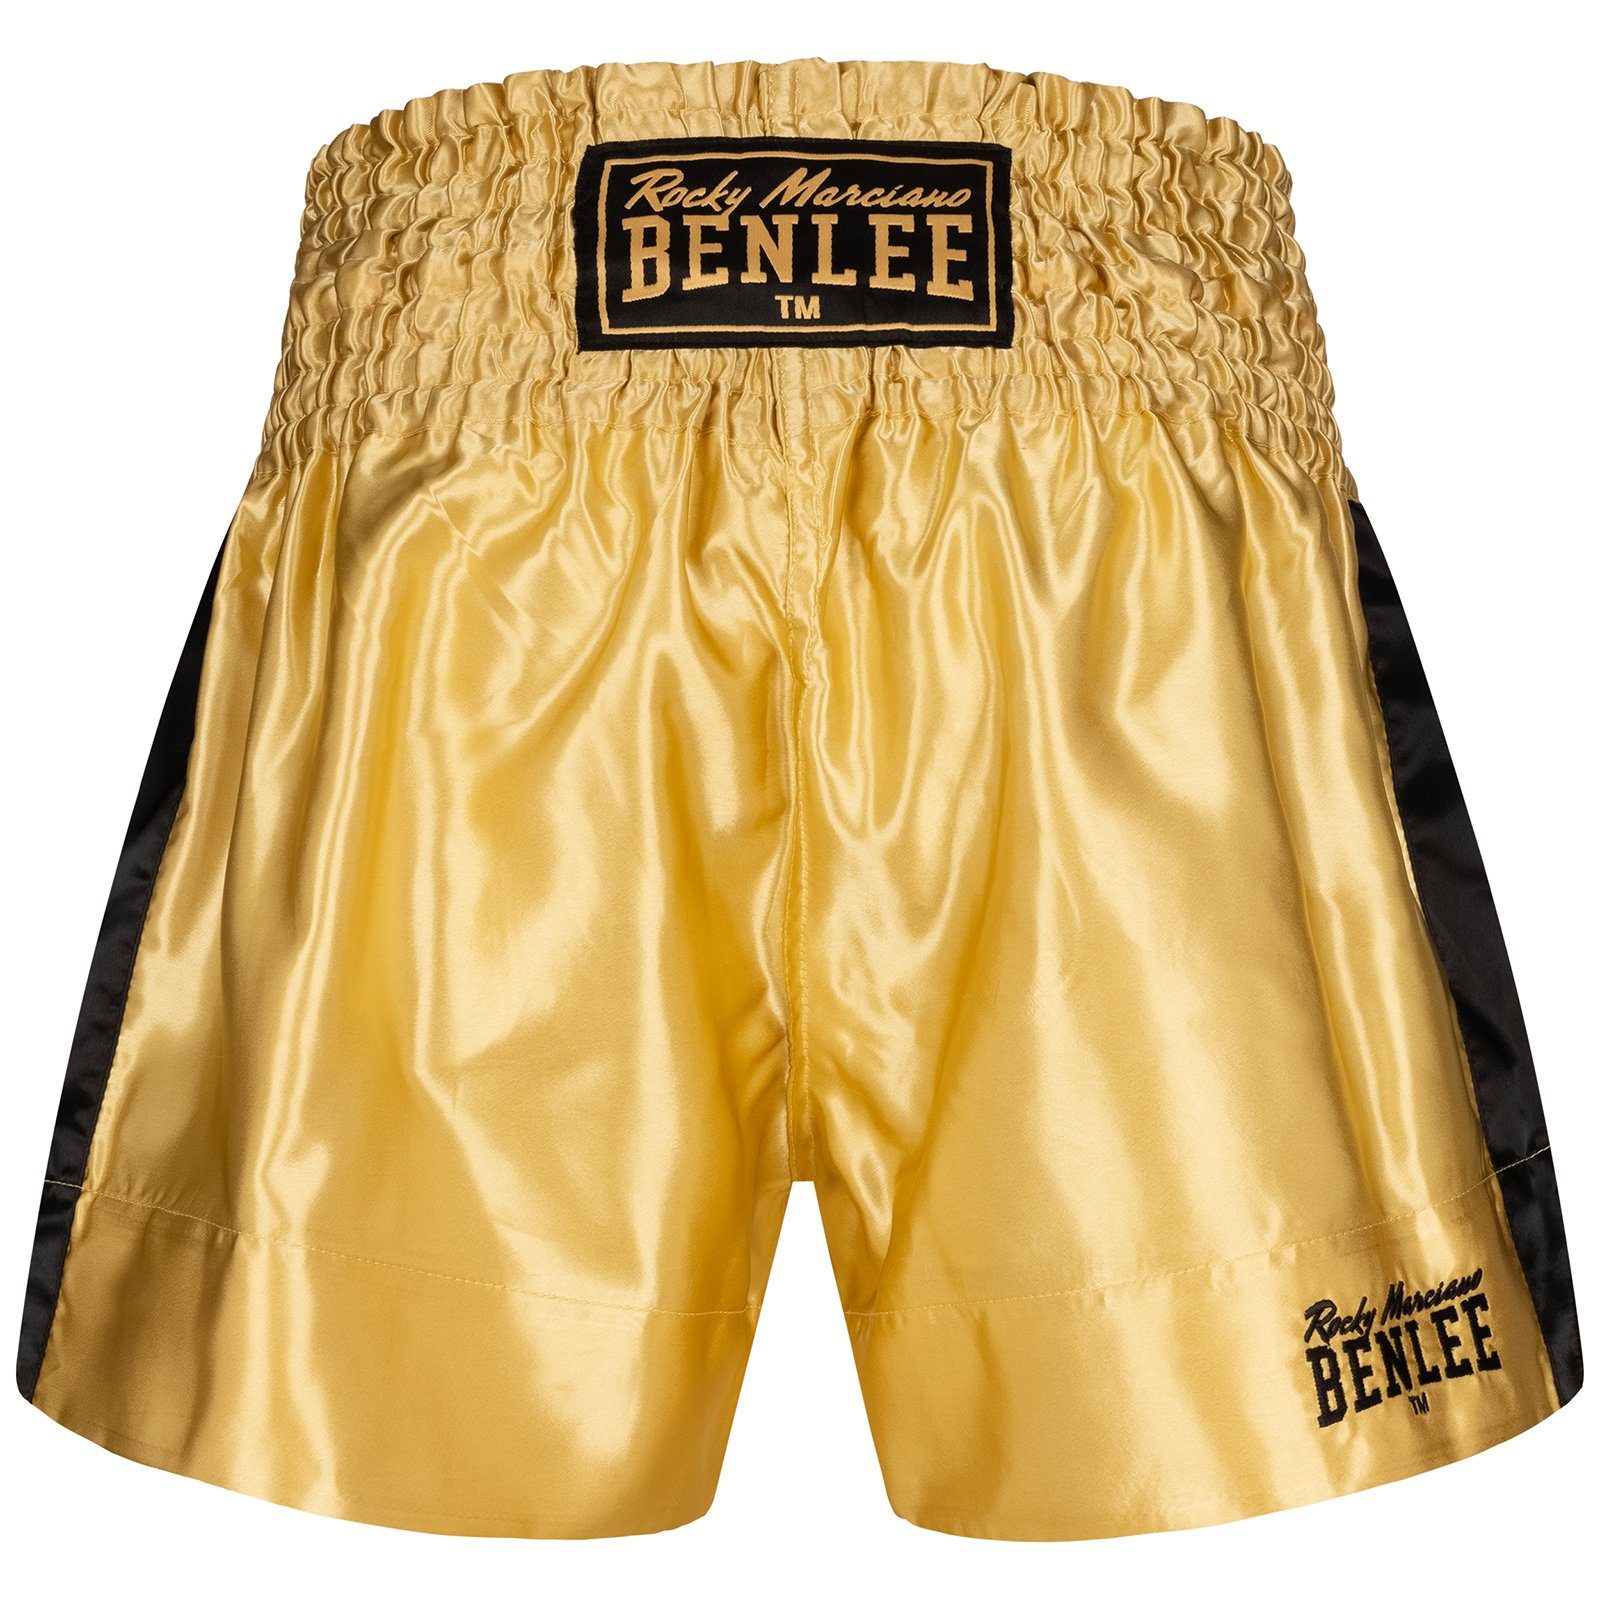 Benlee Rocky Marciano Sporthose Benlee Herren Boxshorts Thai Goldy gold/black